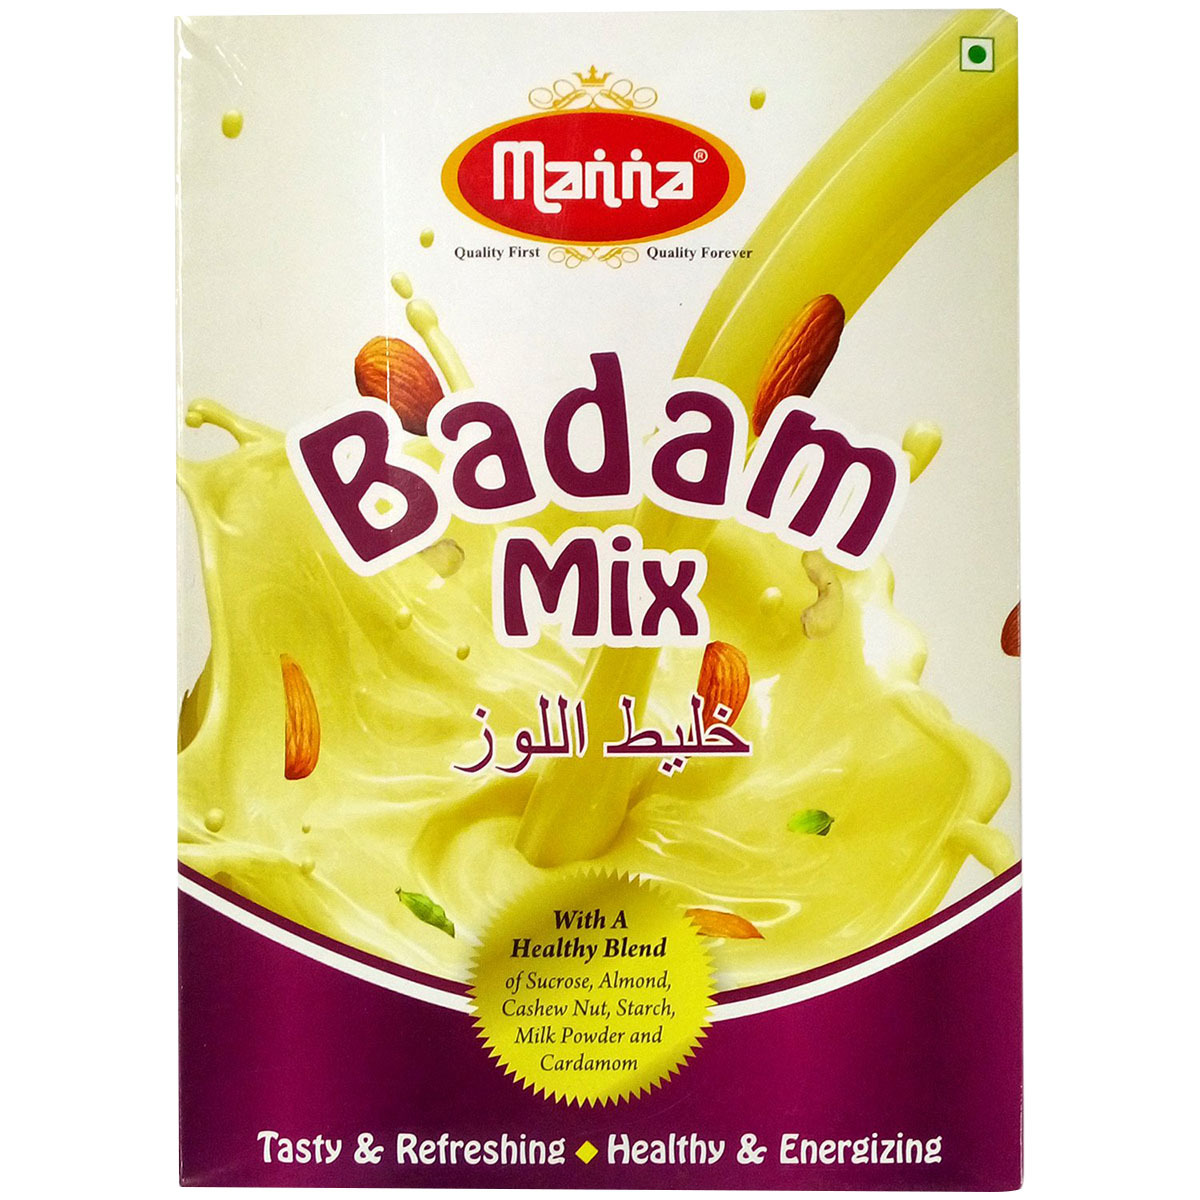 Manna Badam Mix 200g